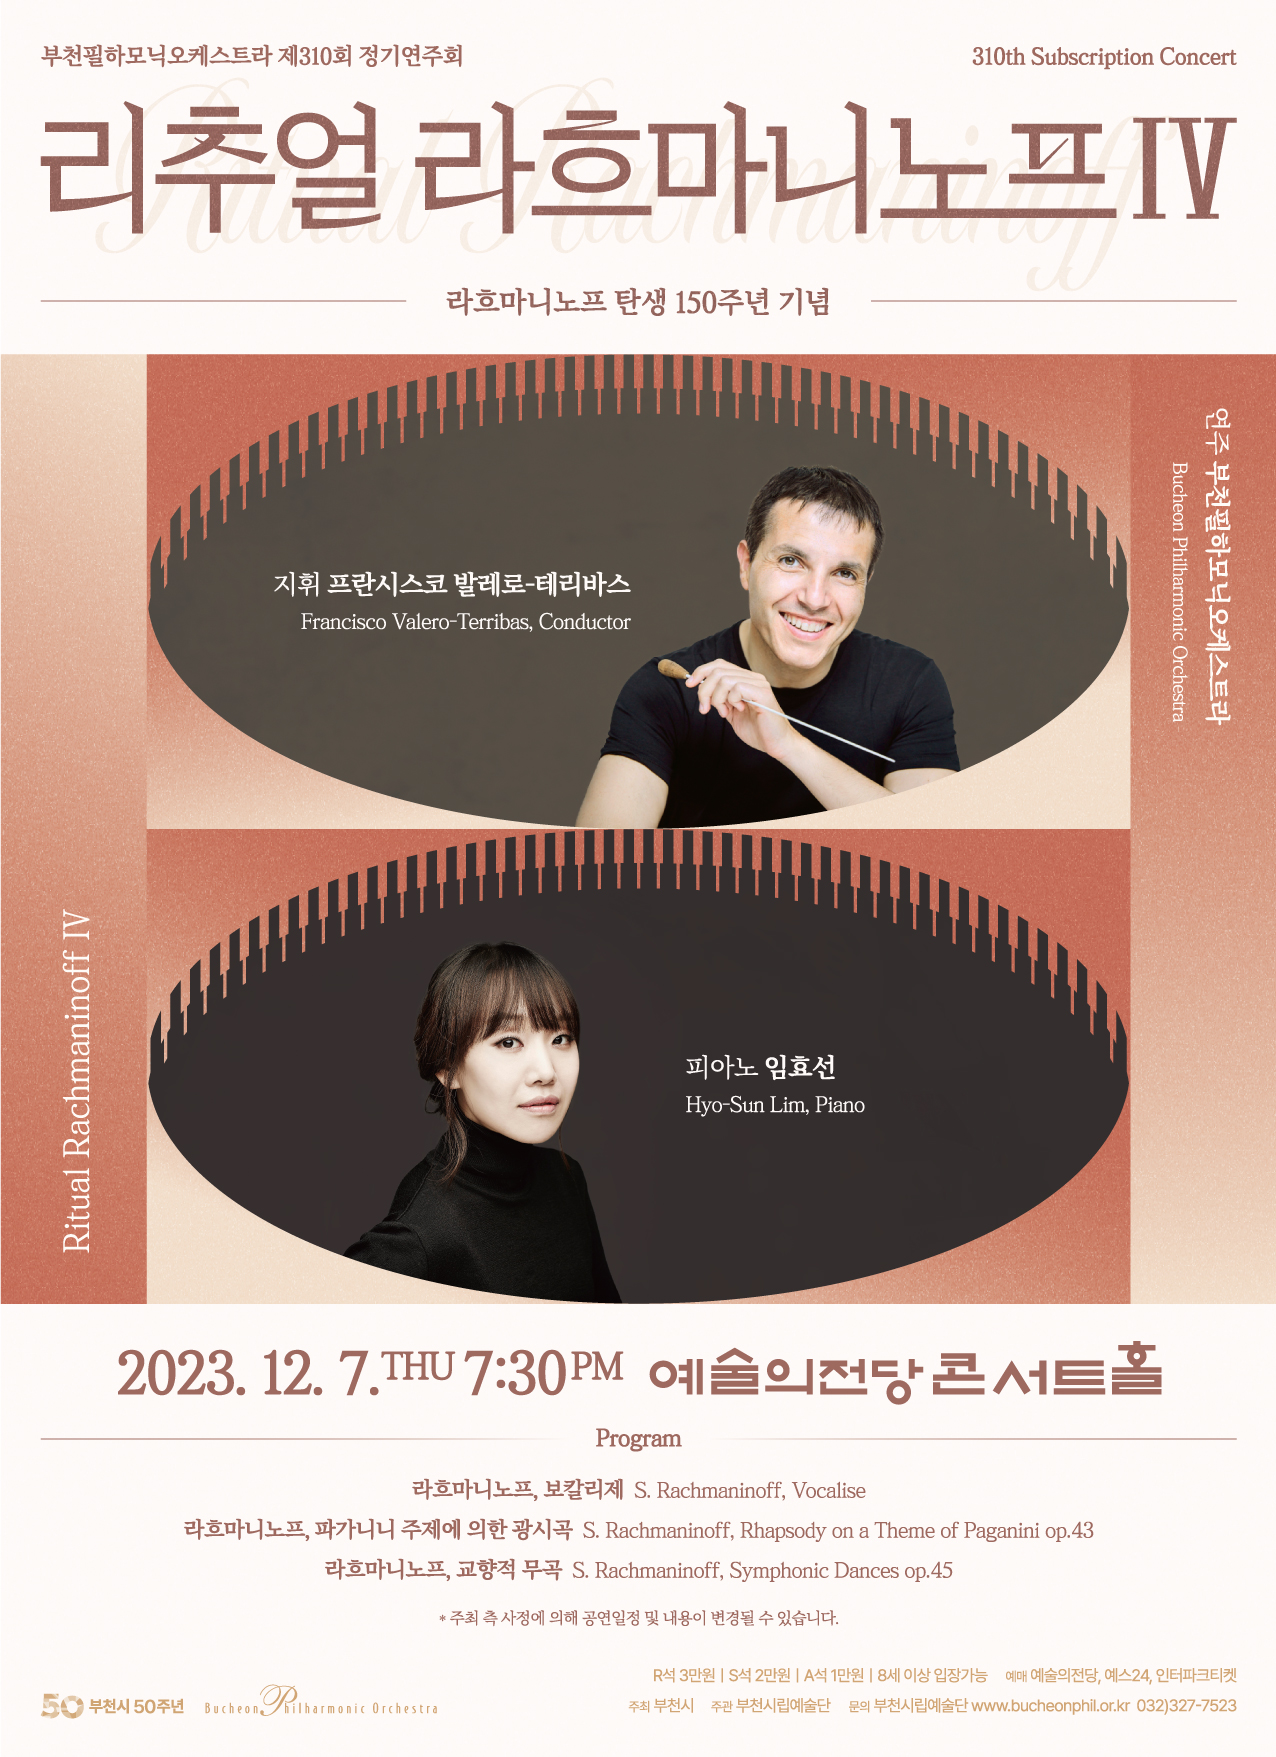 [12.7]Bucheon Philharmonic Orchestra 310th Subscription Concert 